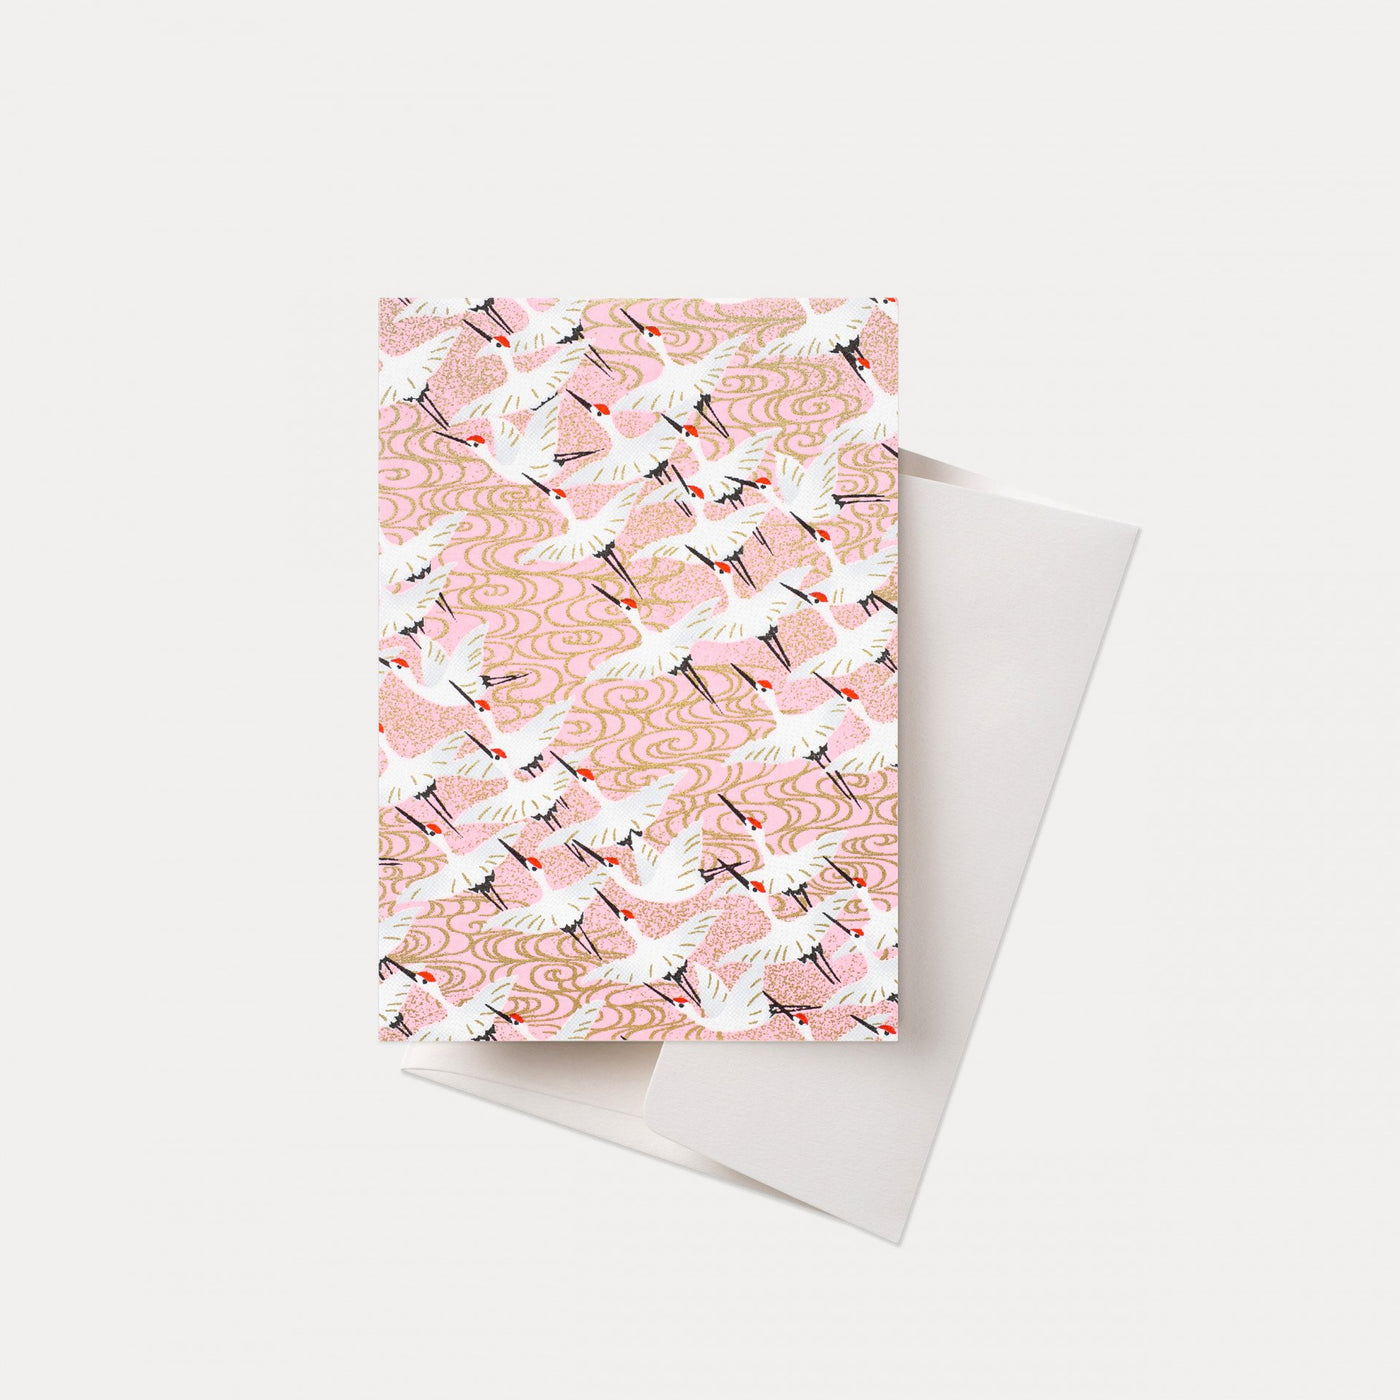 Esmie Greeting Card - White Cranes / Pink